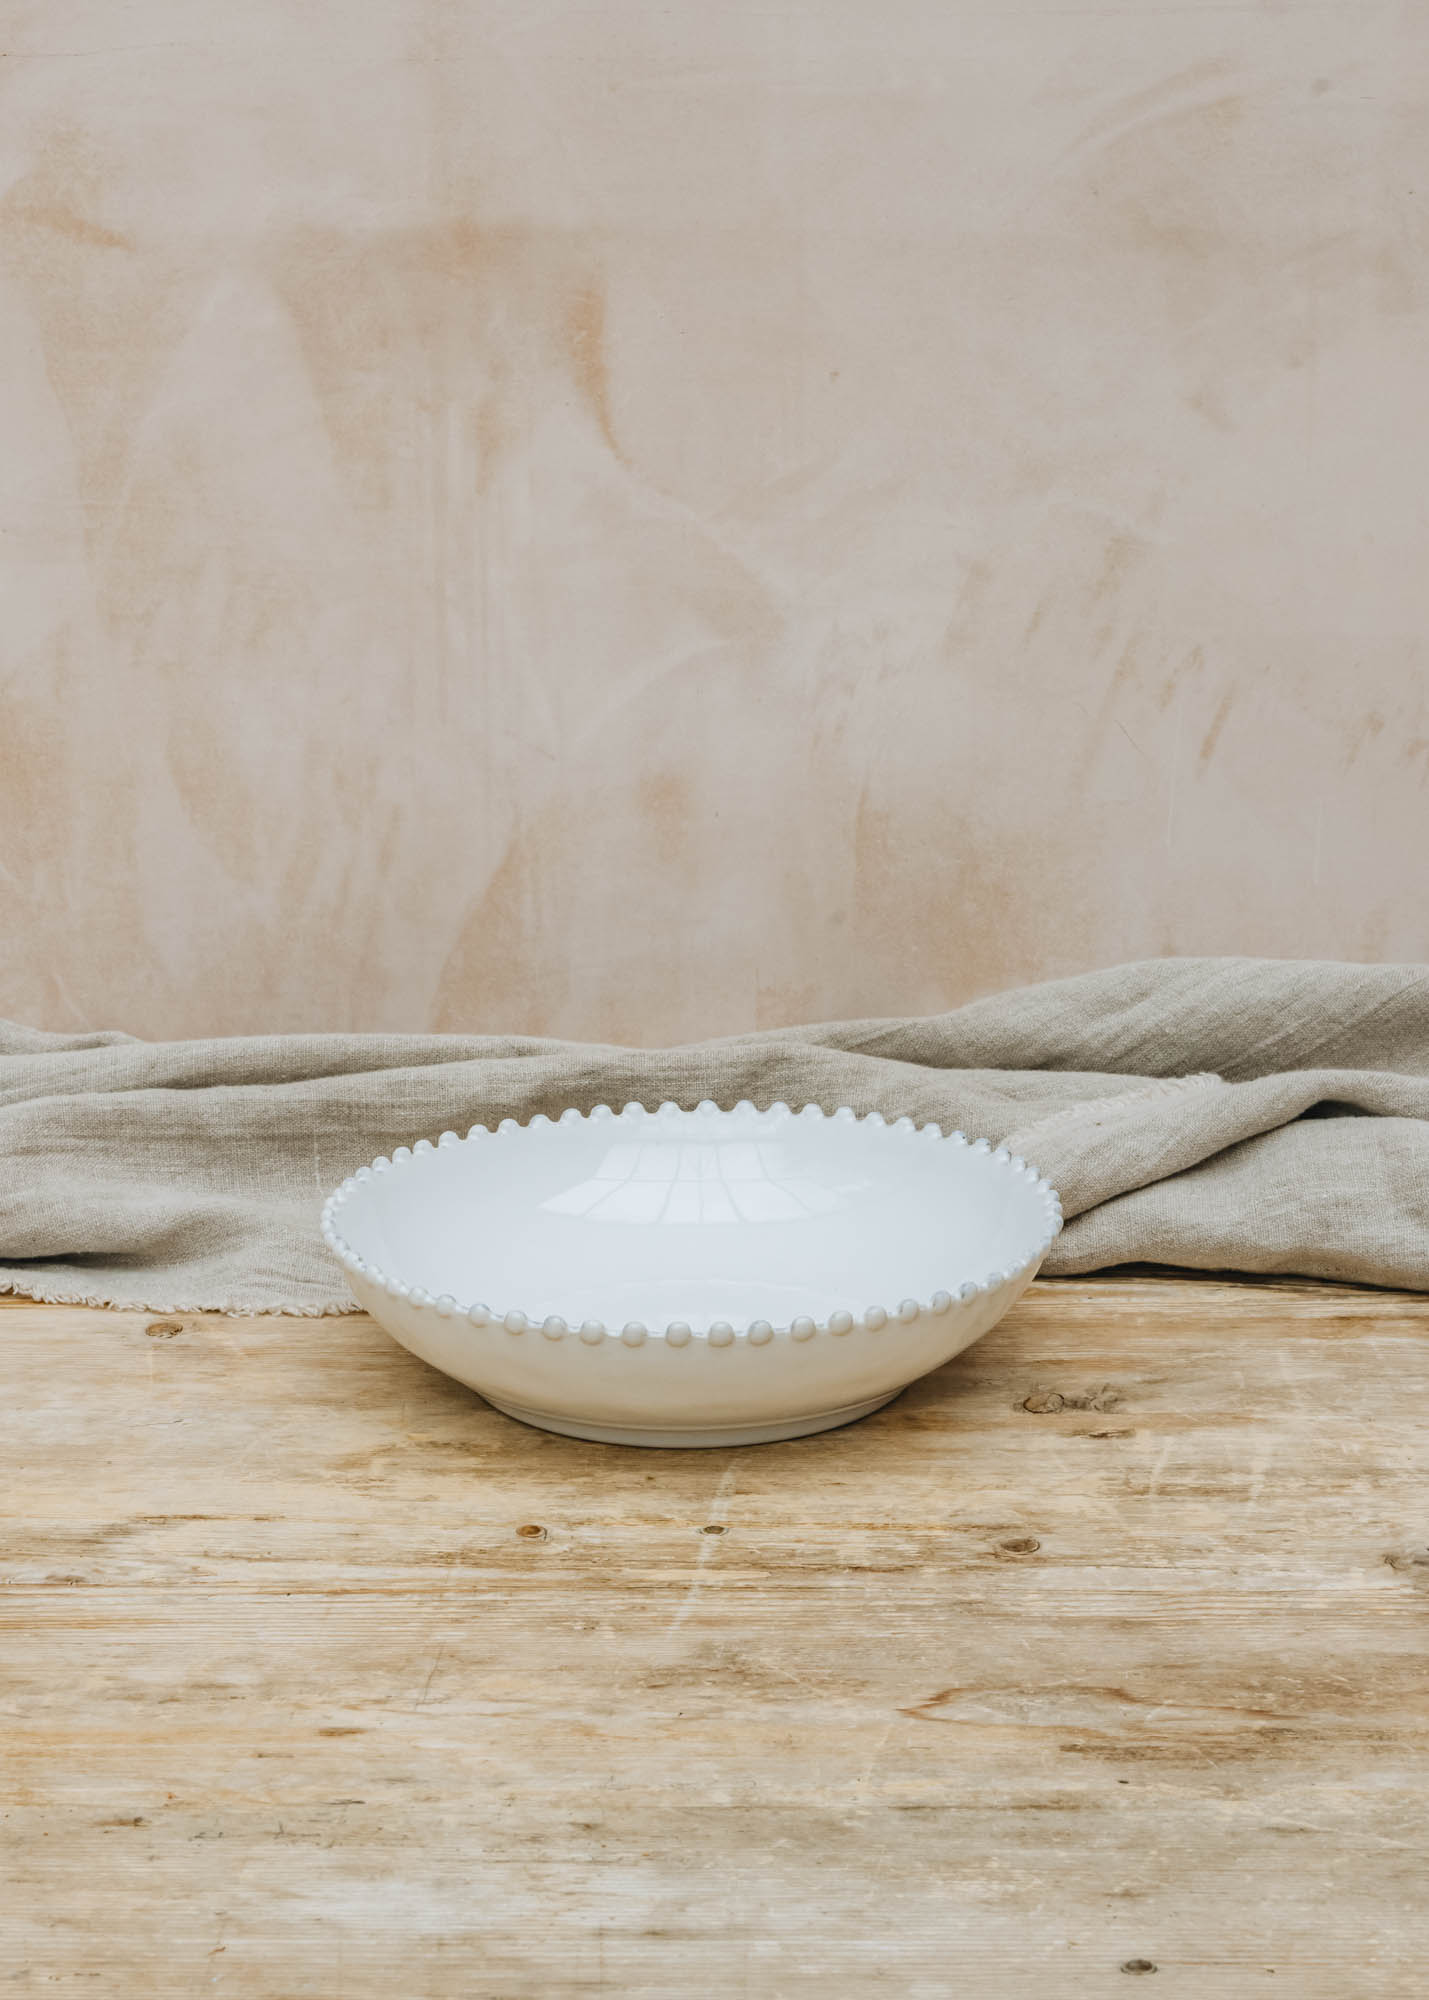 Pearl White Pasta Bowl